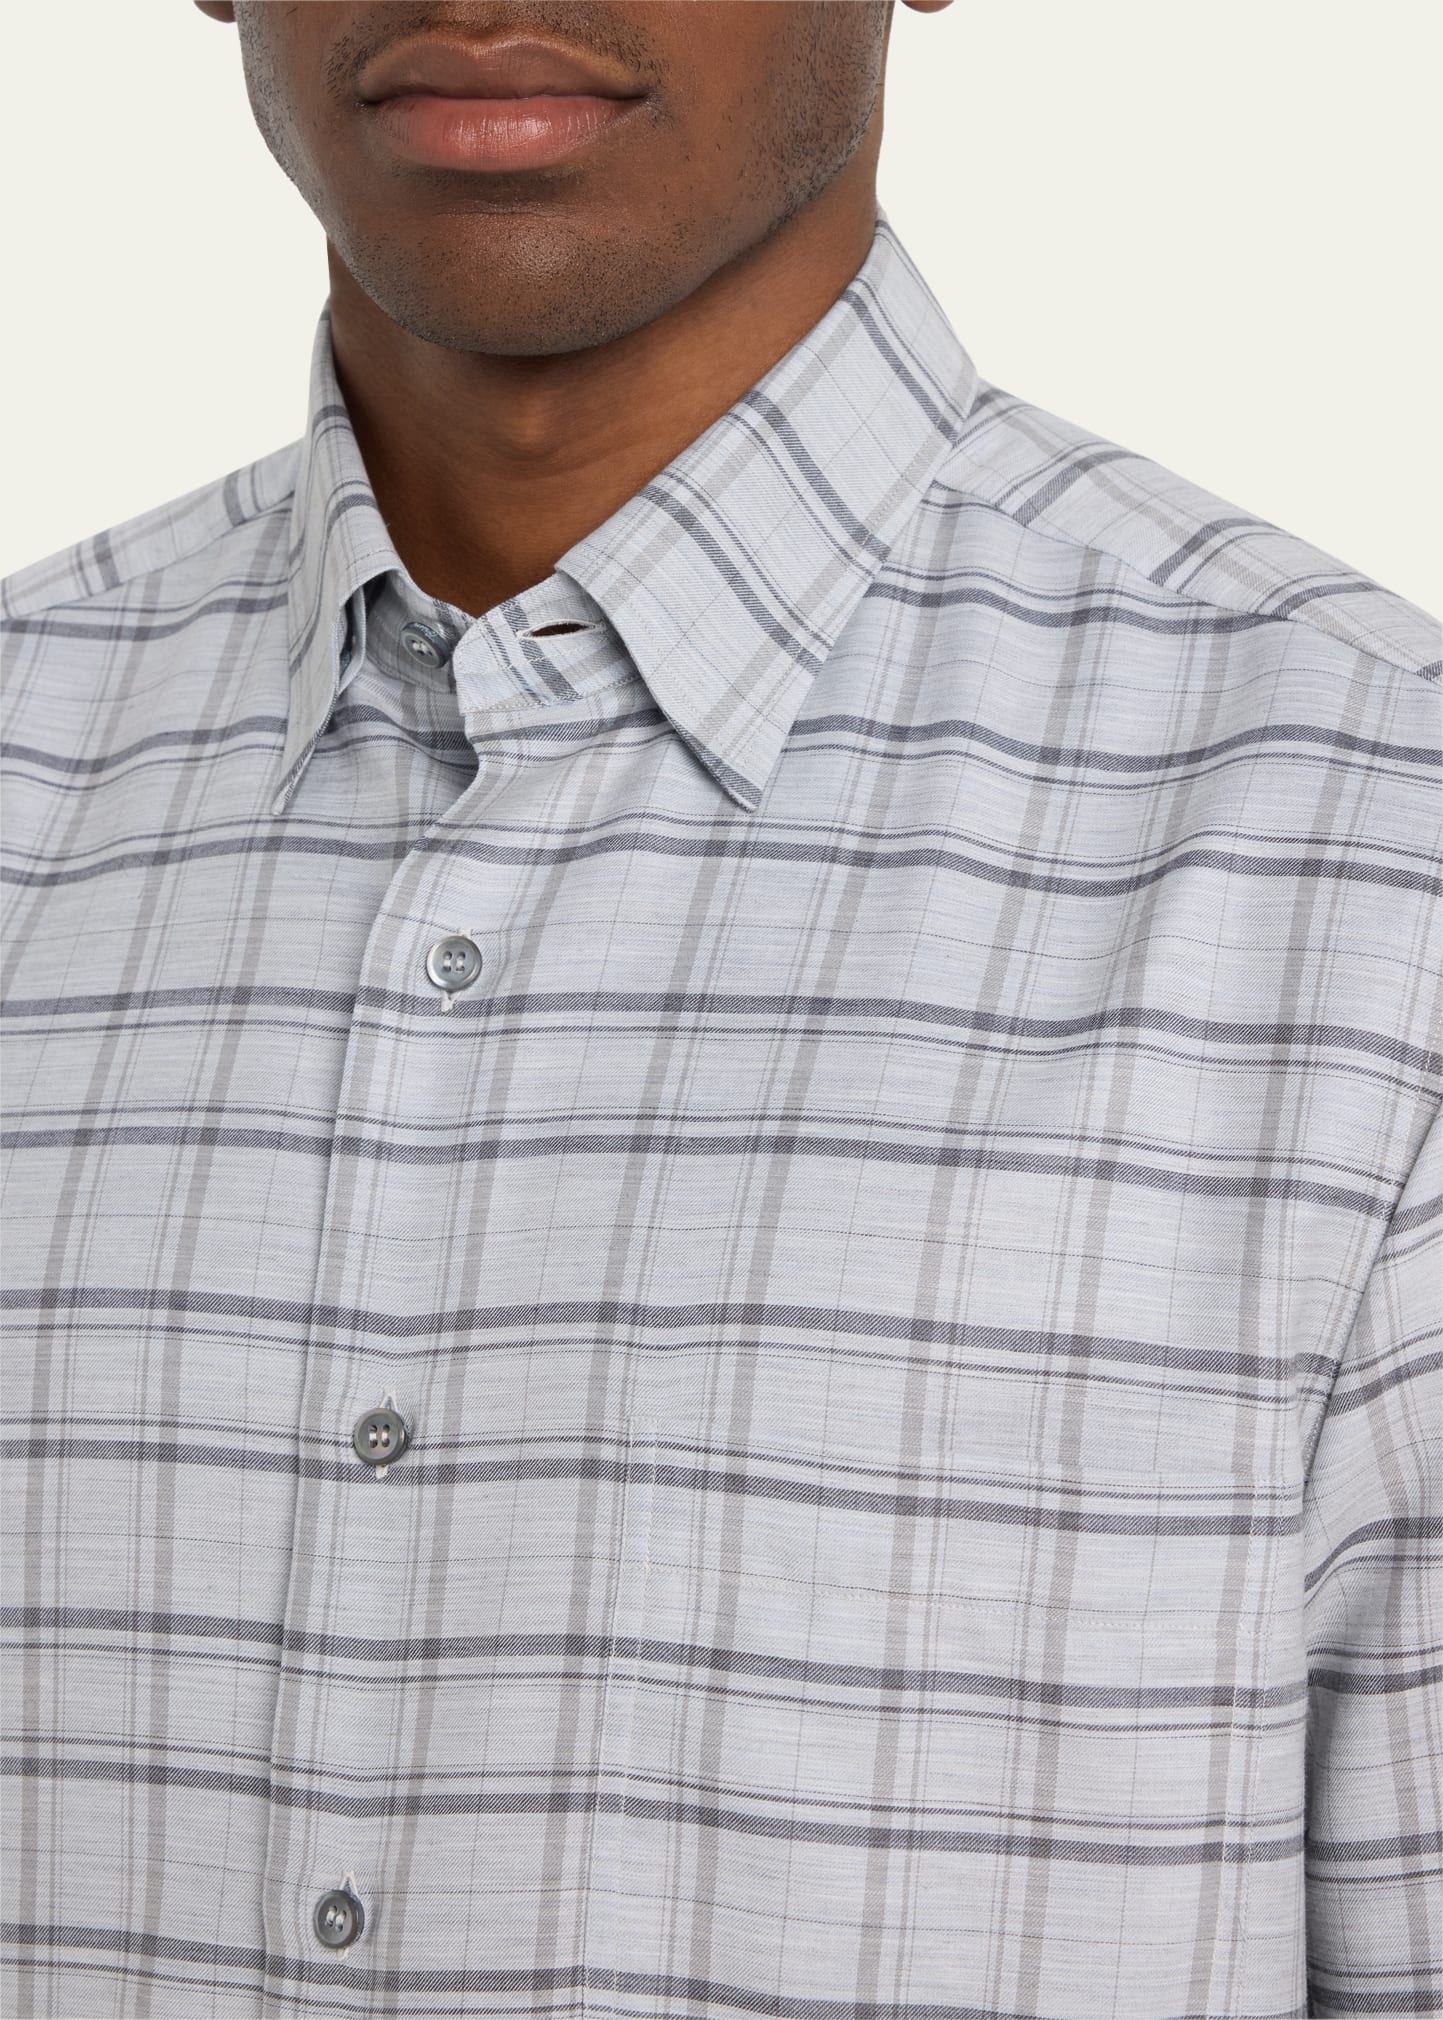 Men's Cotton Check-Print Sport Shirt - 5